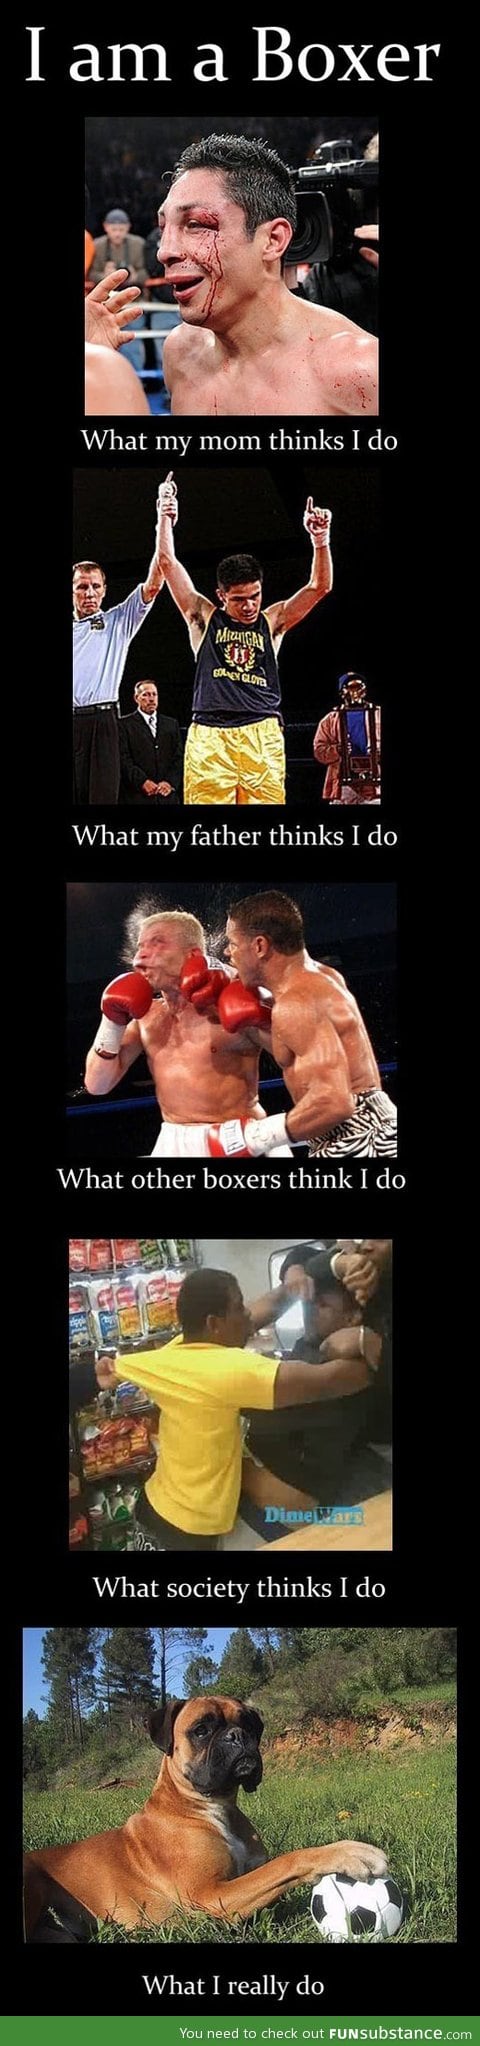 I'm a boxer